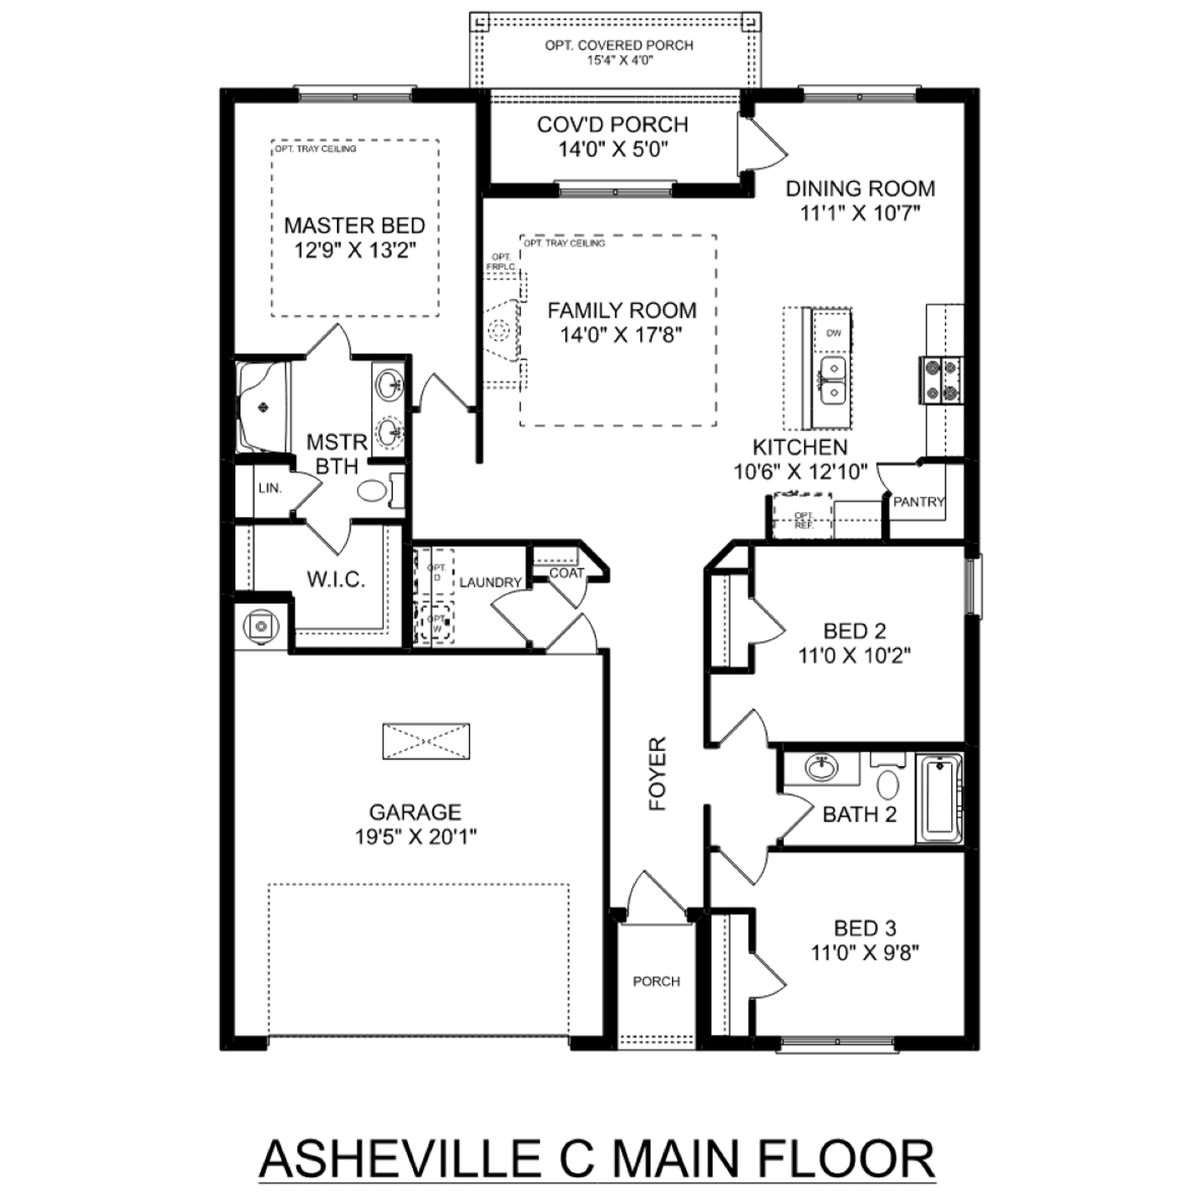 1 - The Asheville C floor plan layout for 6256 Pisgah Drive in Davidson Homes' Spragins Cove community.